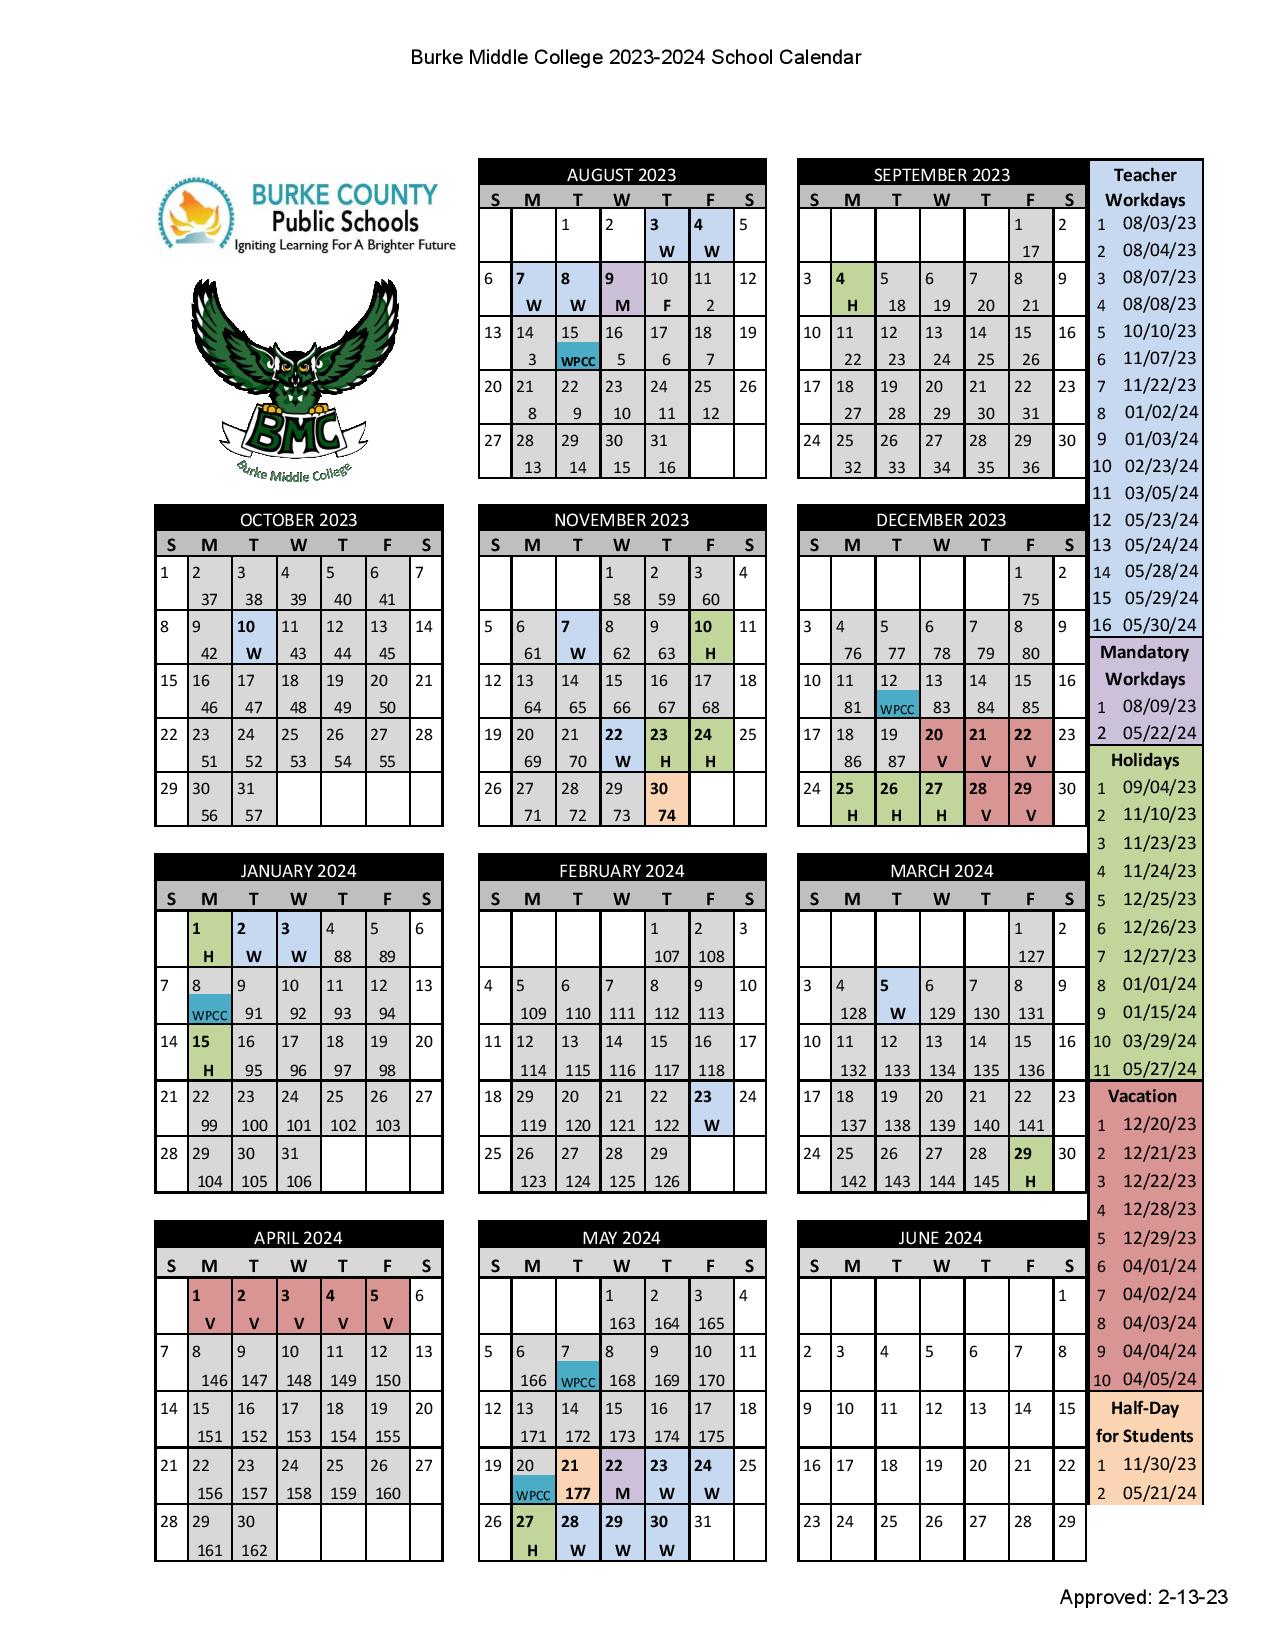 Burke County Schools Calendar 2023 2024 in PDF